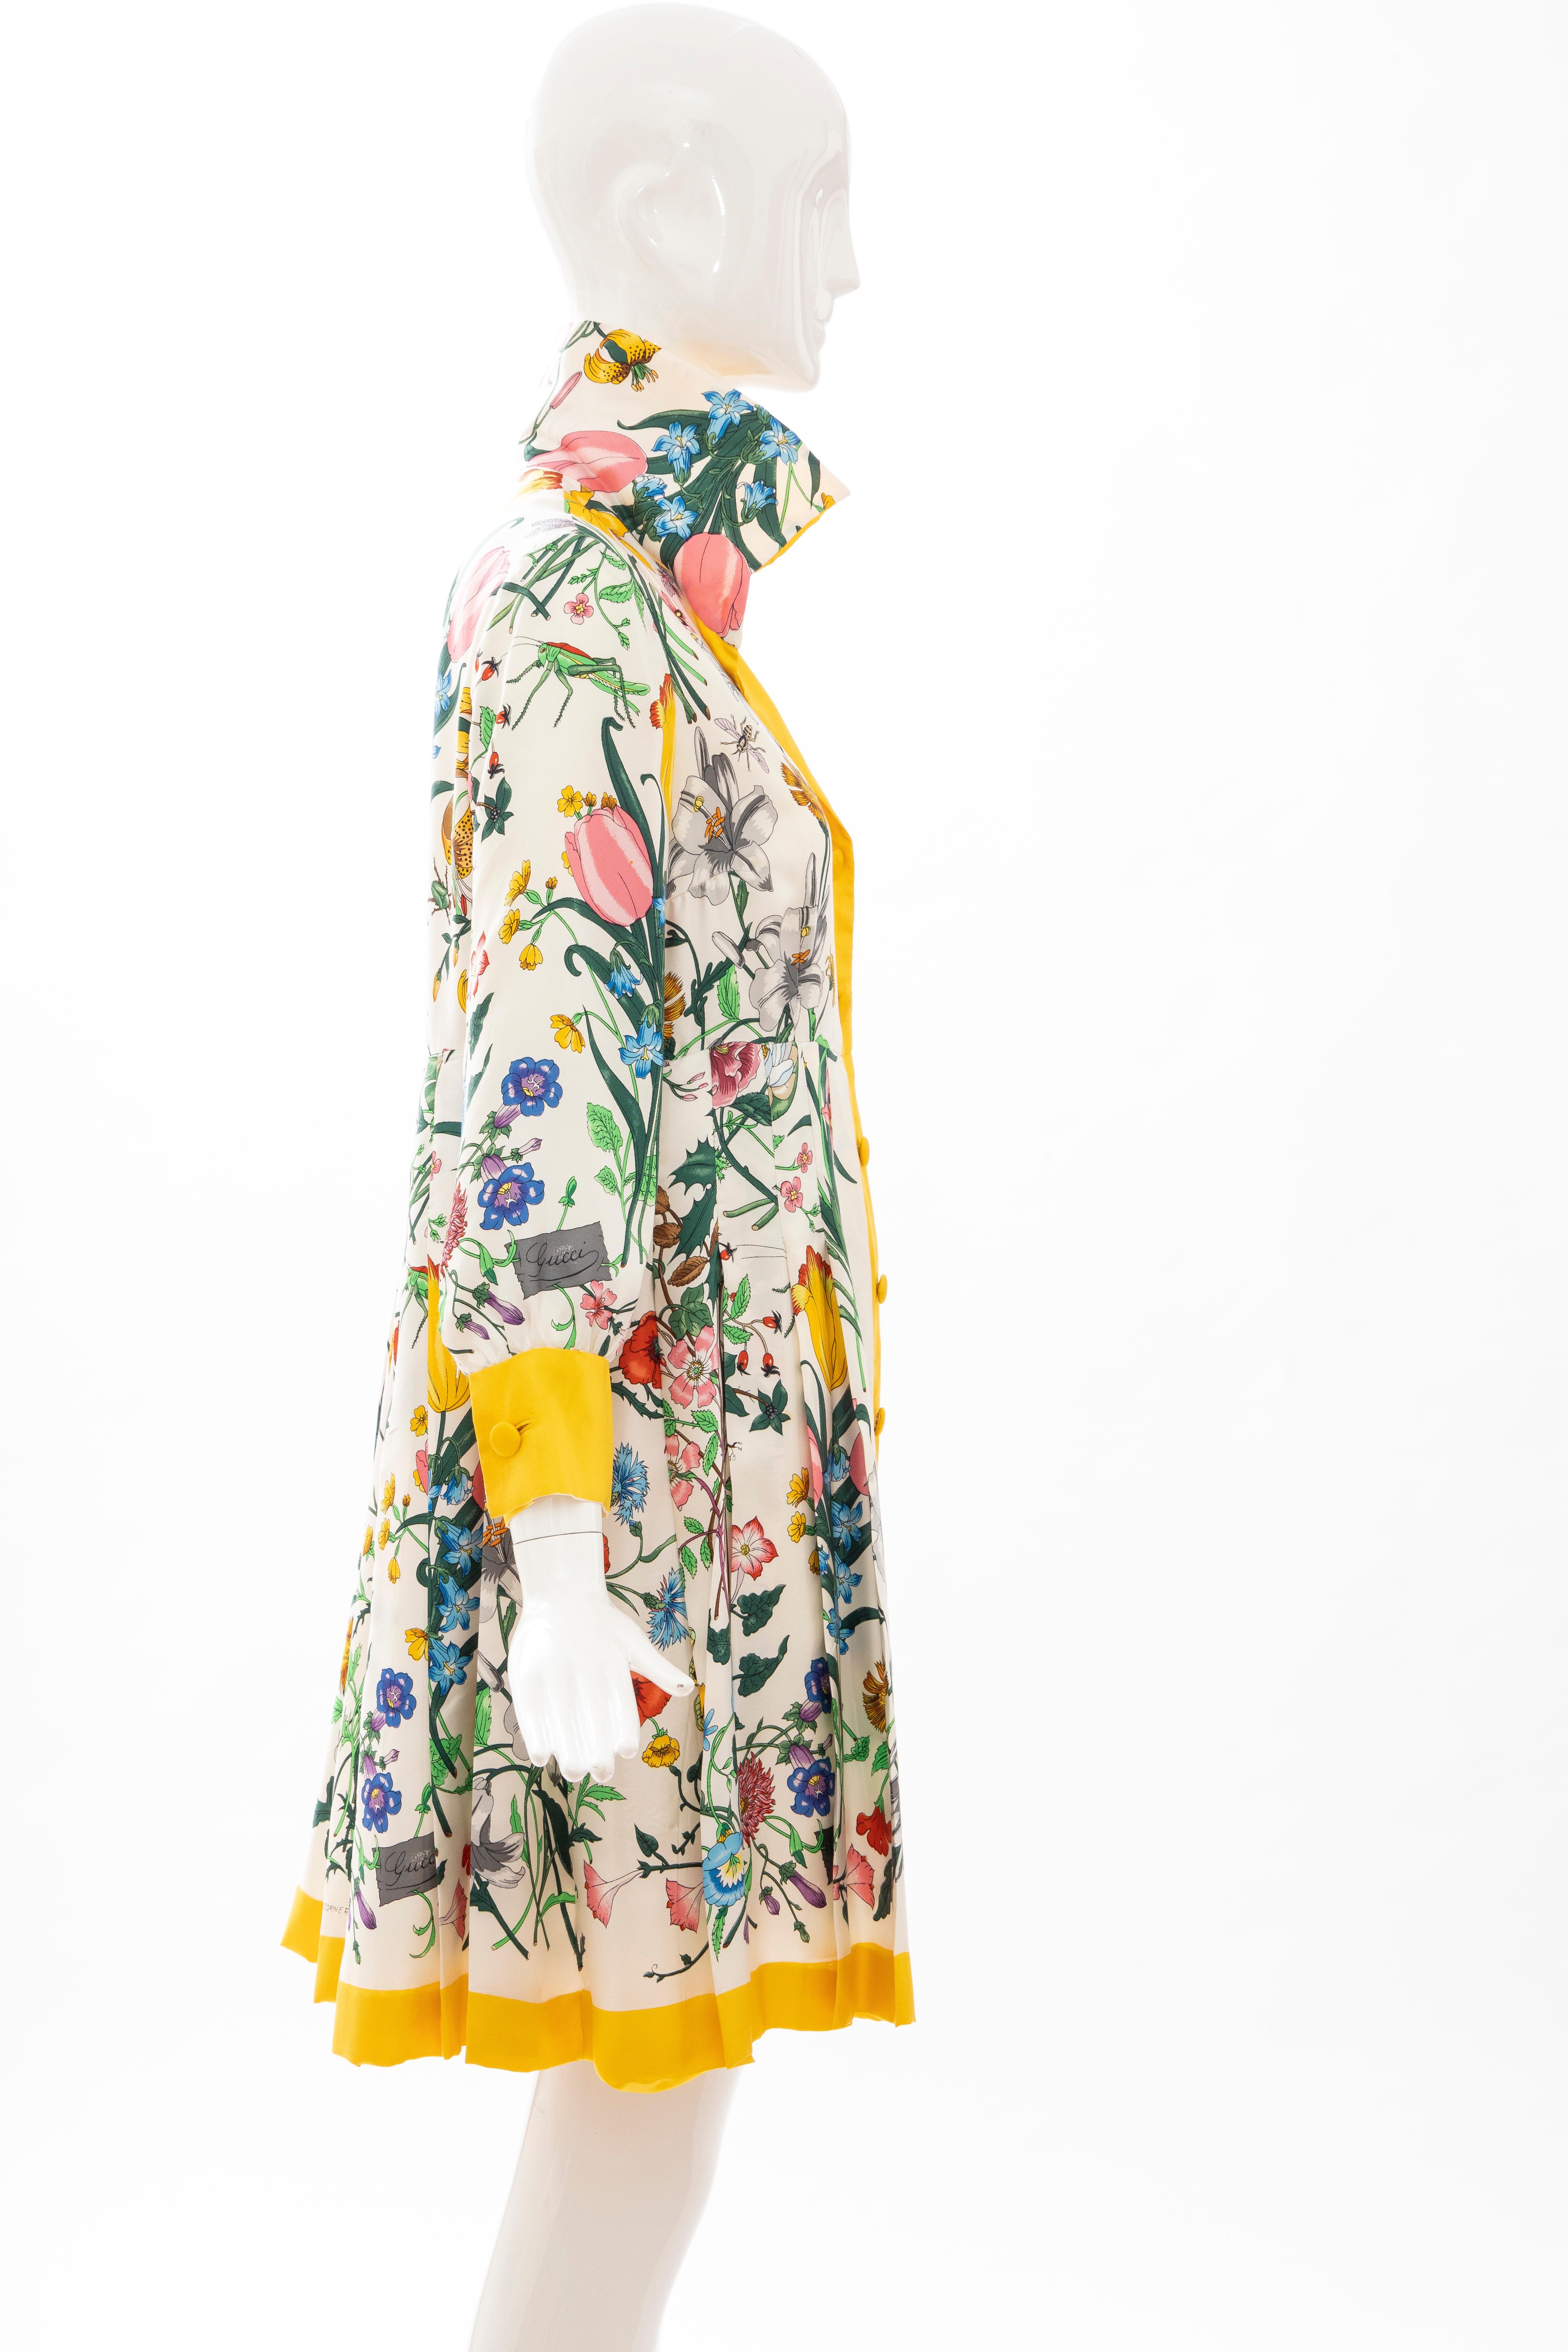 Beige Gucci Vittorio Accornero Flora Fauna Screen Printed Silk Dress, Circa: 1970's